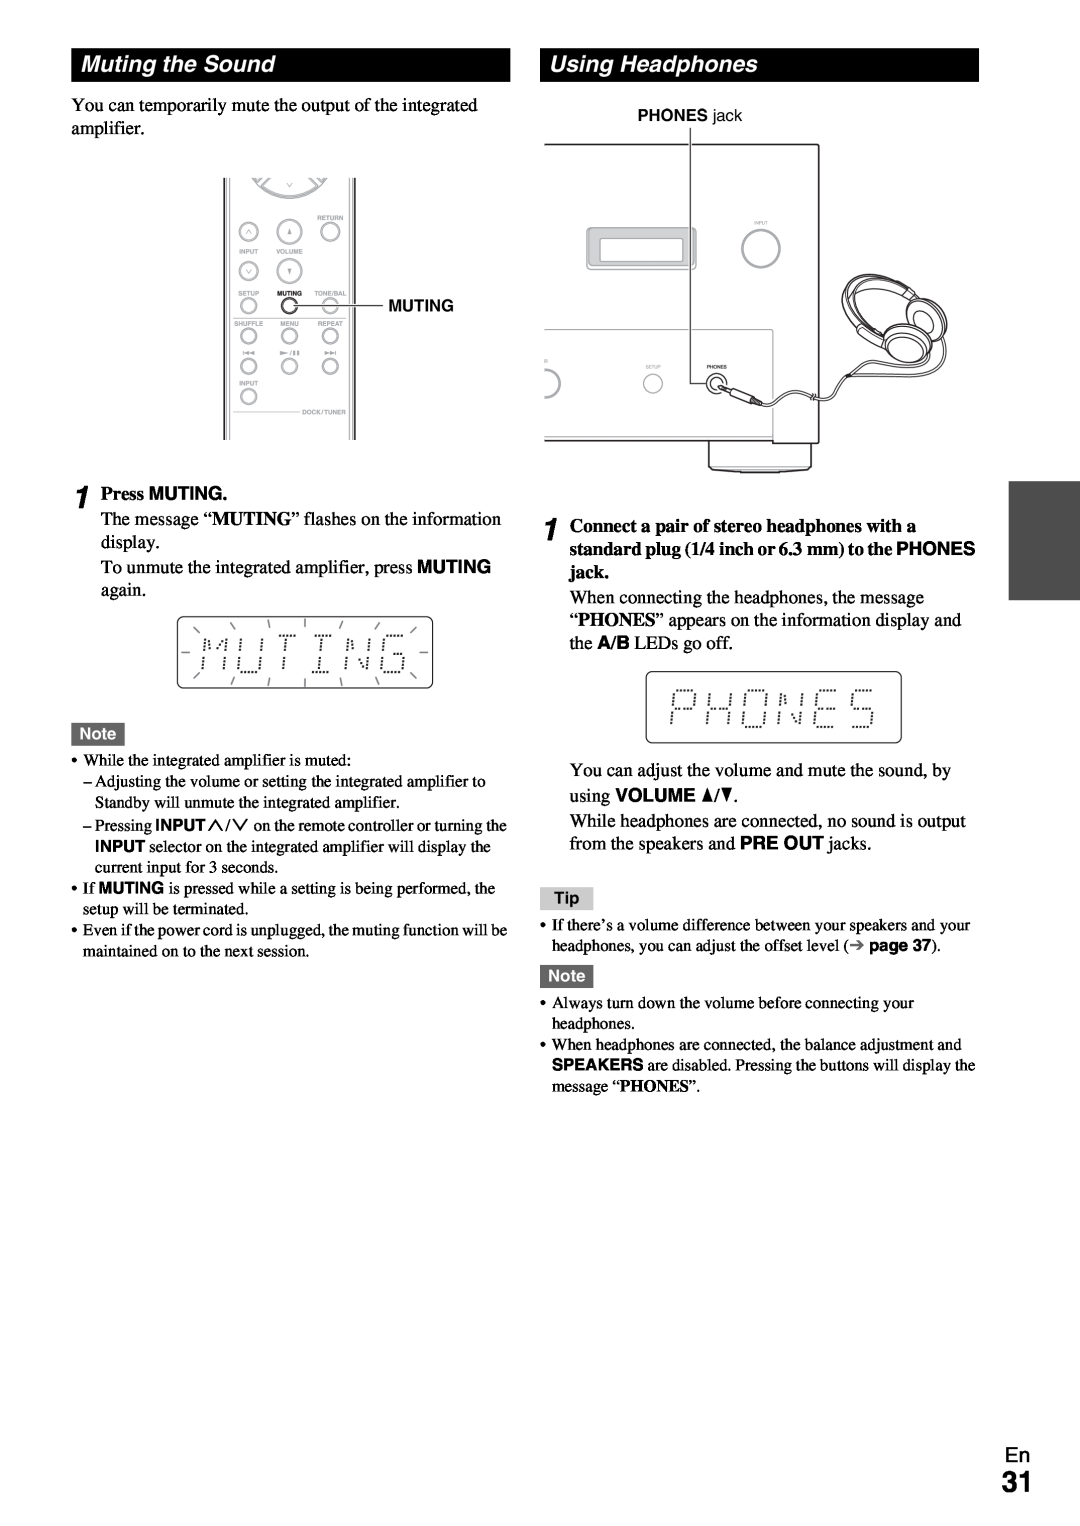 Onkyo A-9070 instruction manual Muting the Sound, Using Headphones, Press MUTING 